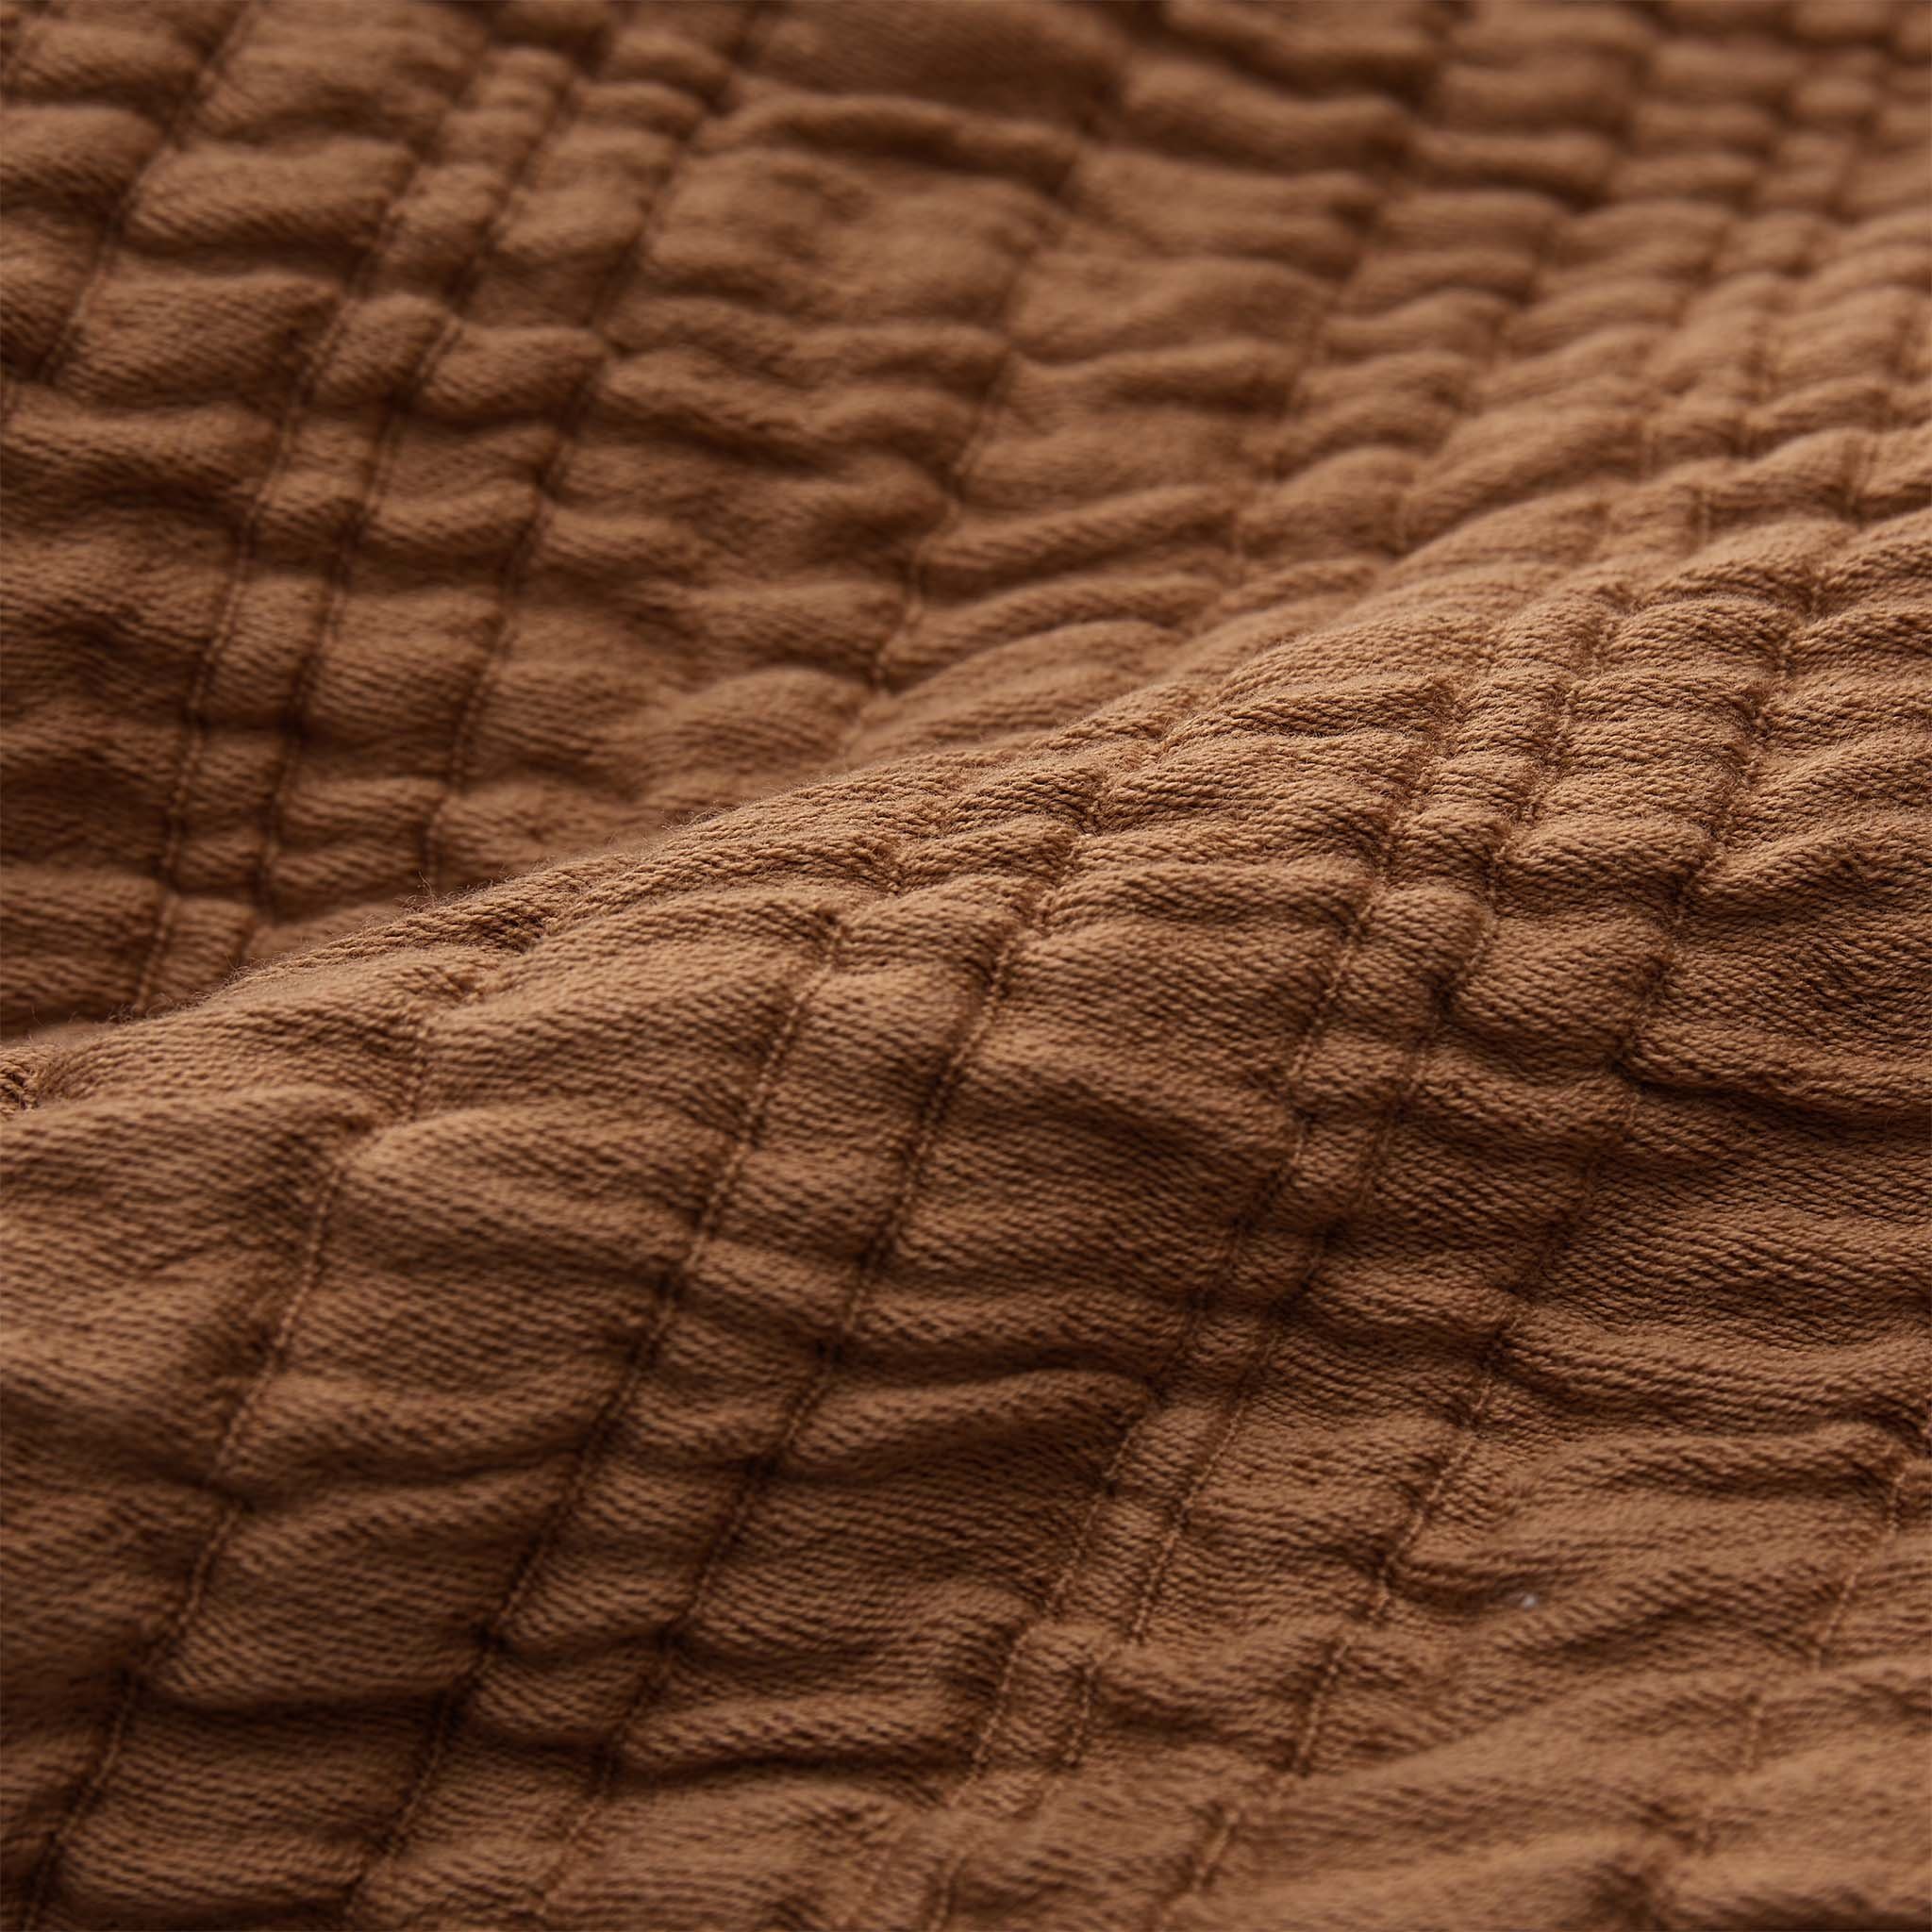 Urbanara, BCI - Blass Strukturierte Tagesdecke Metalassé-Webung Musselin-Decke, Clay Überwurf Baumwolle, 100% Velho